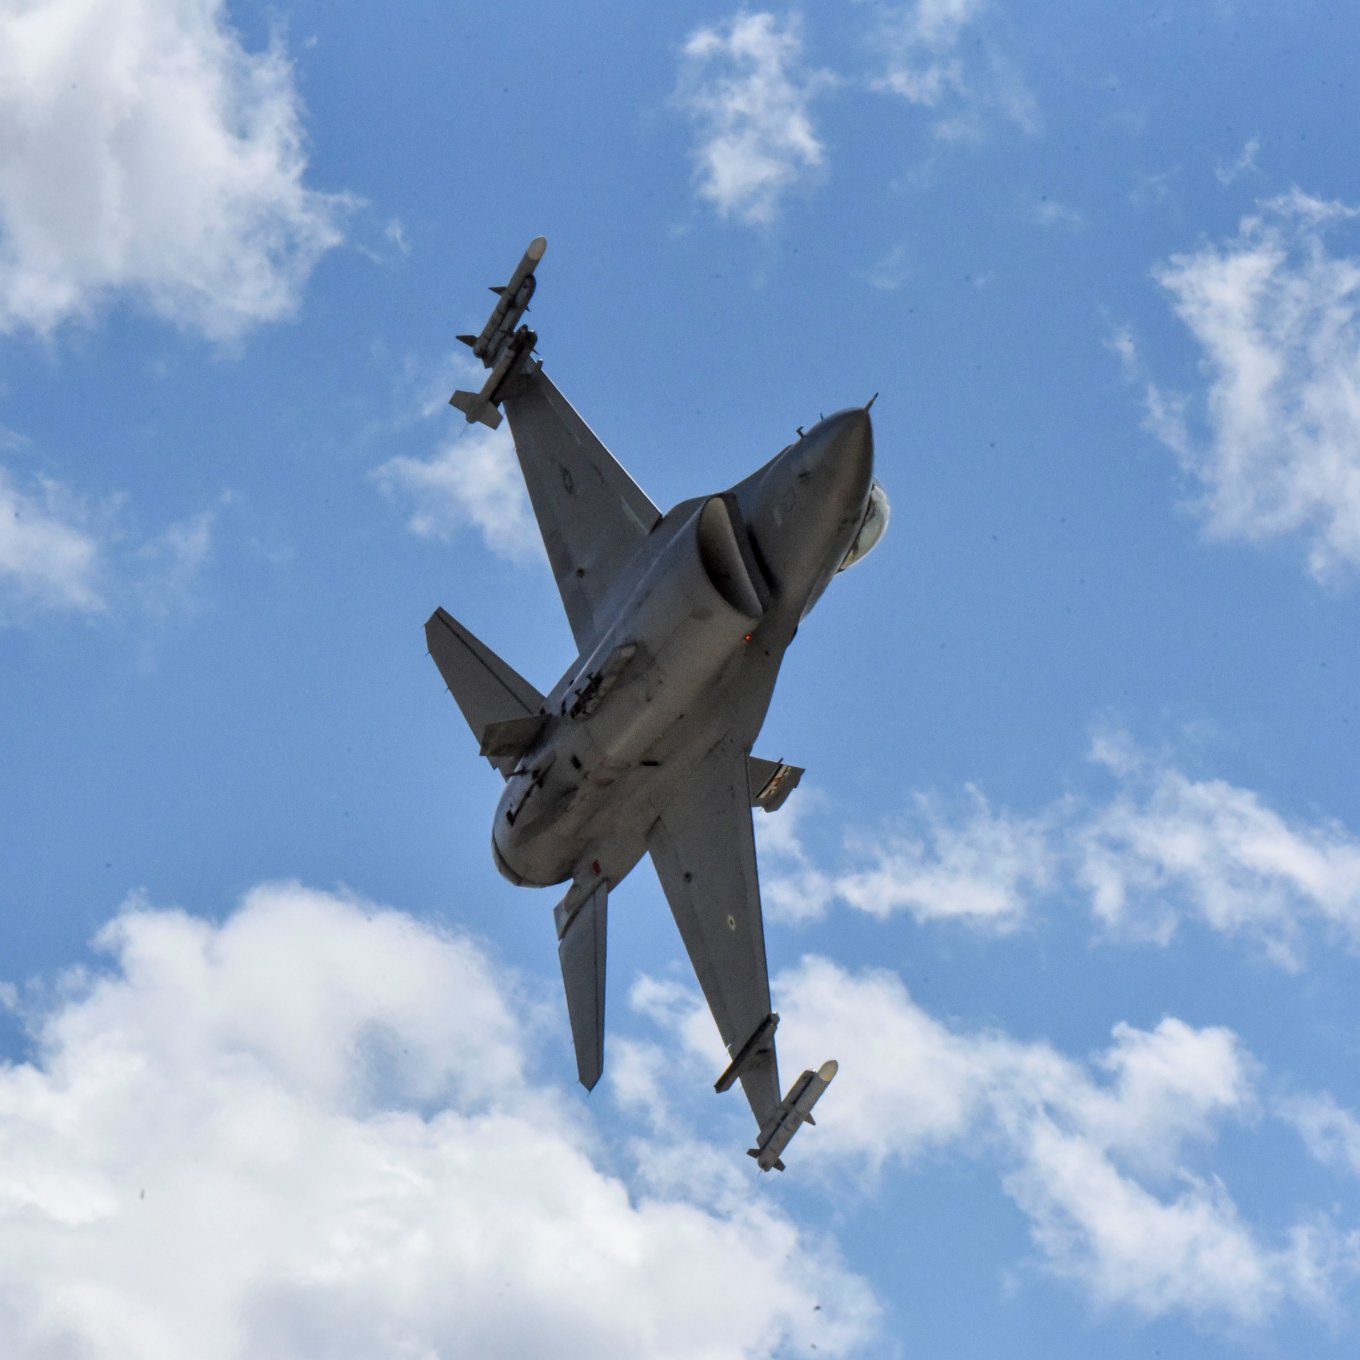 The F-16 aircraft Defense Express EU High Representative: the F-16 Fighter Training of Ukrainian Pilots Has Begun